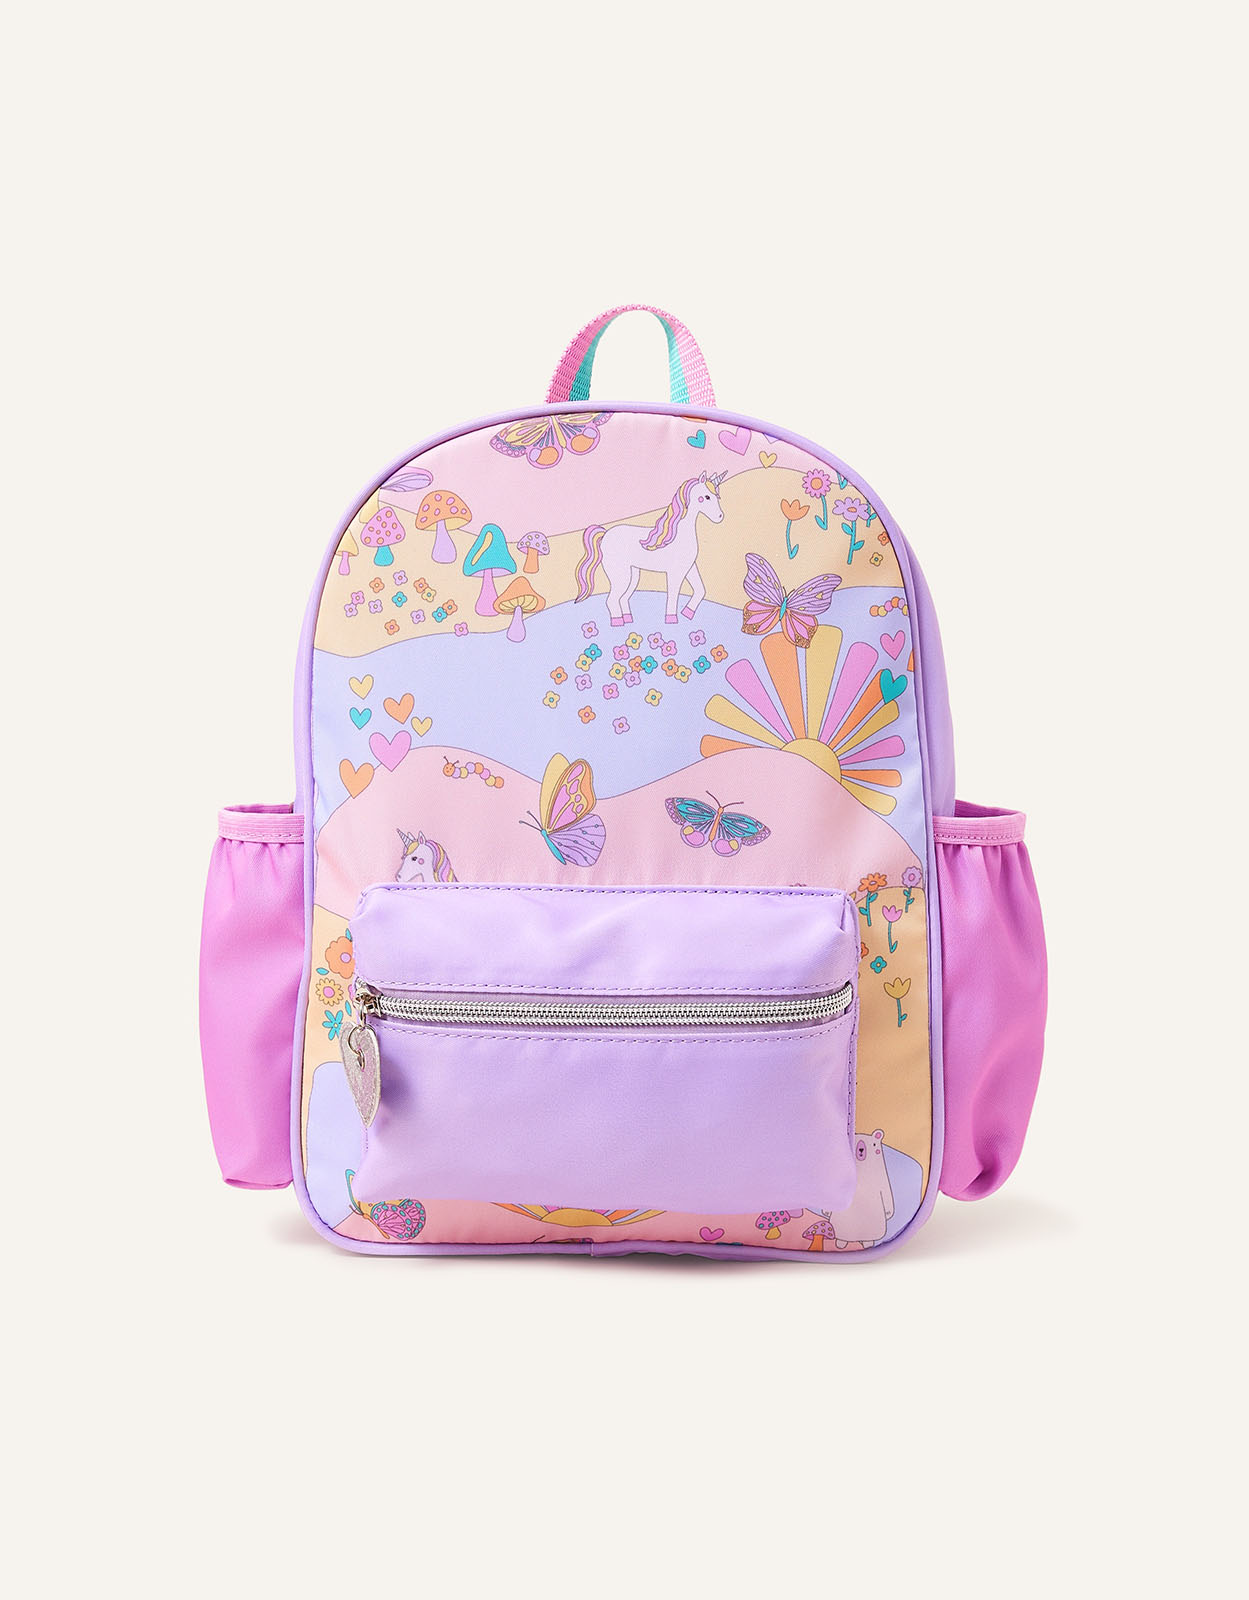 Accessorize Girl's Unicorn Print Backpack, Size: 23x20cm